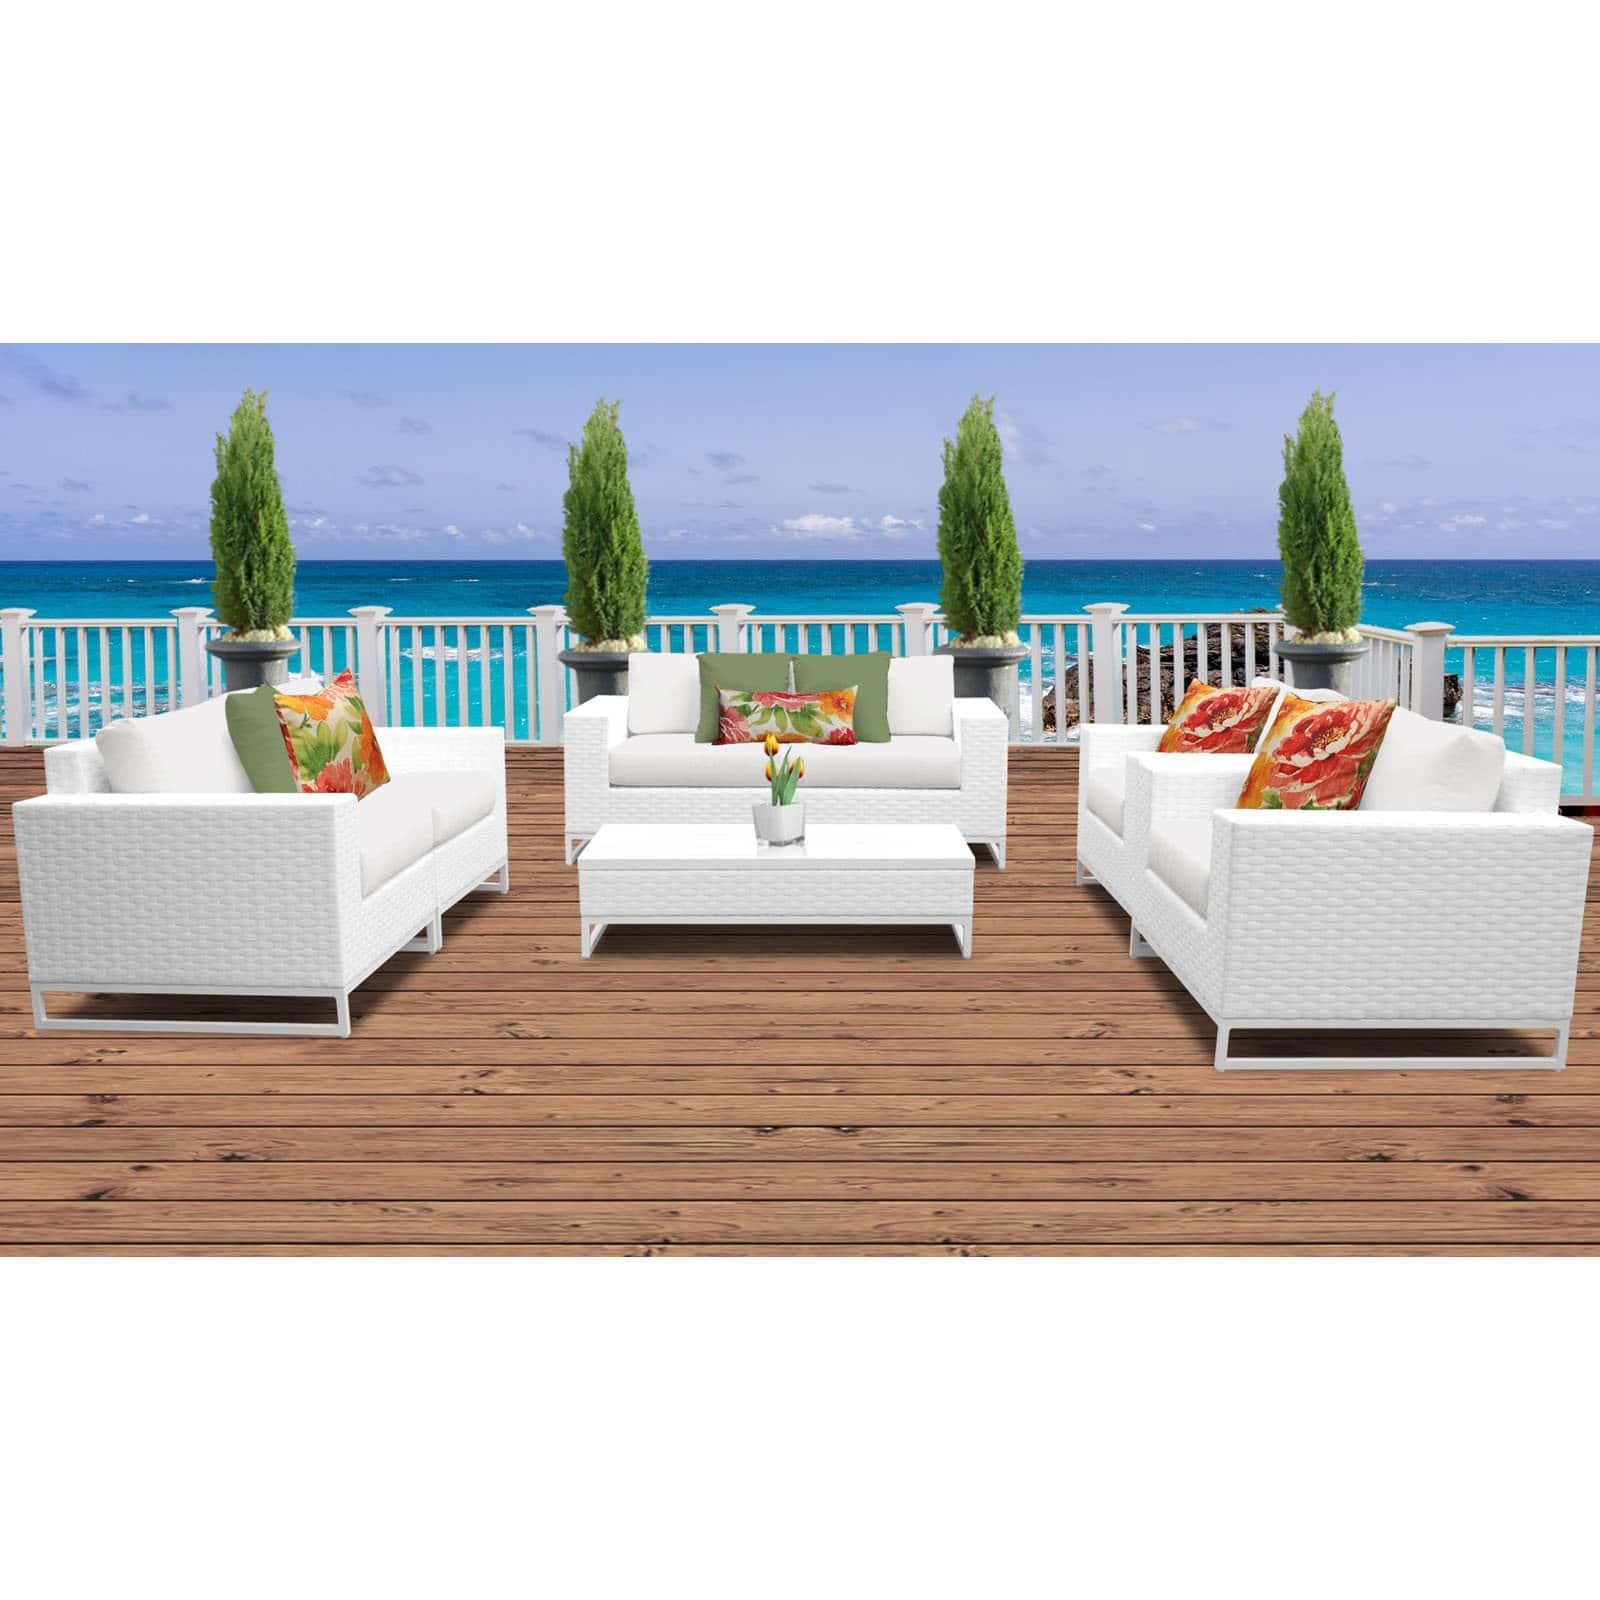 TK Classics Miami 7 Piece Outdoor Wicker Patio Furniture Set 07c - image 3 of 3